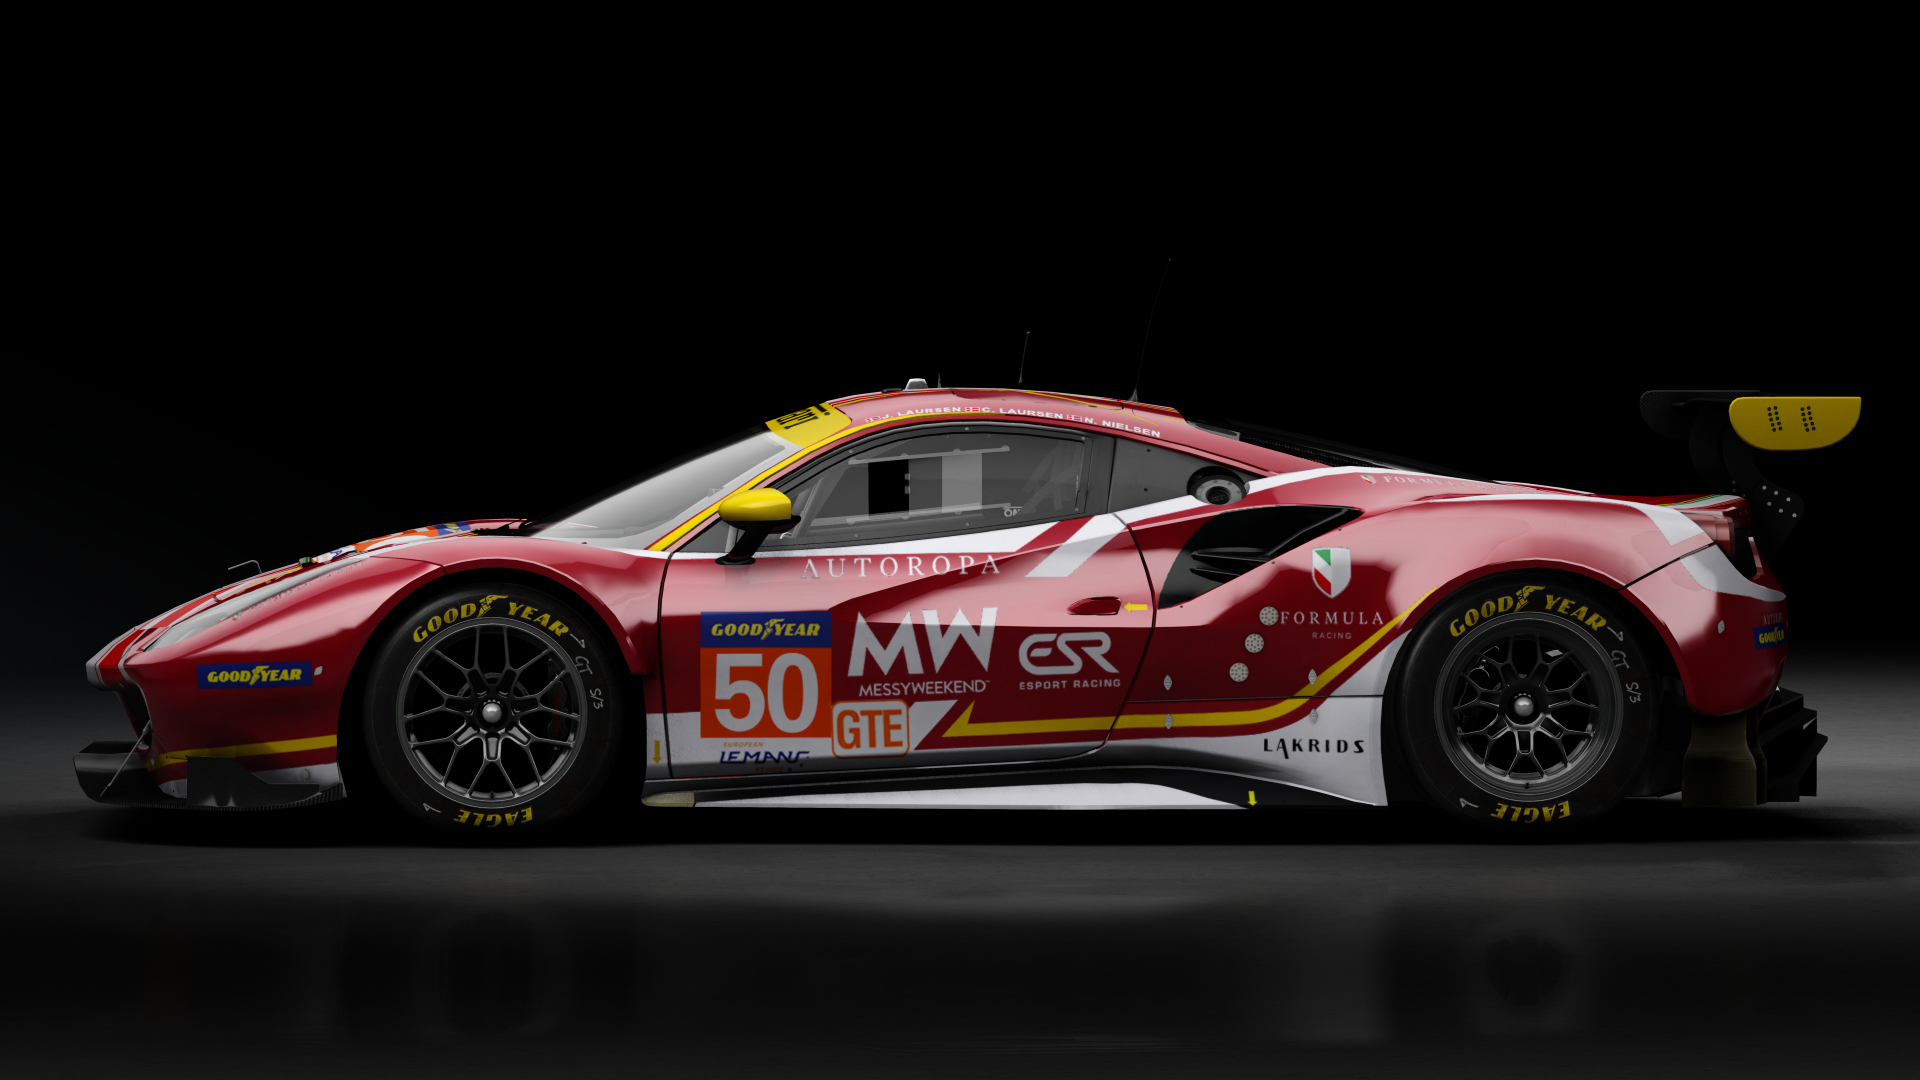 2018 Ferrari 488 GTE Evo [Michelotto], skin 2023 #50 Formula Racing ELMS